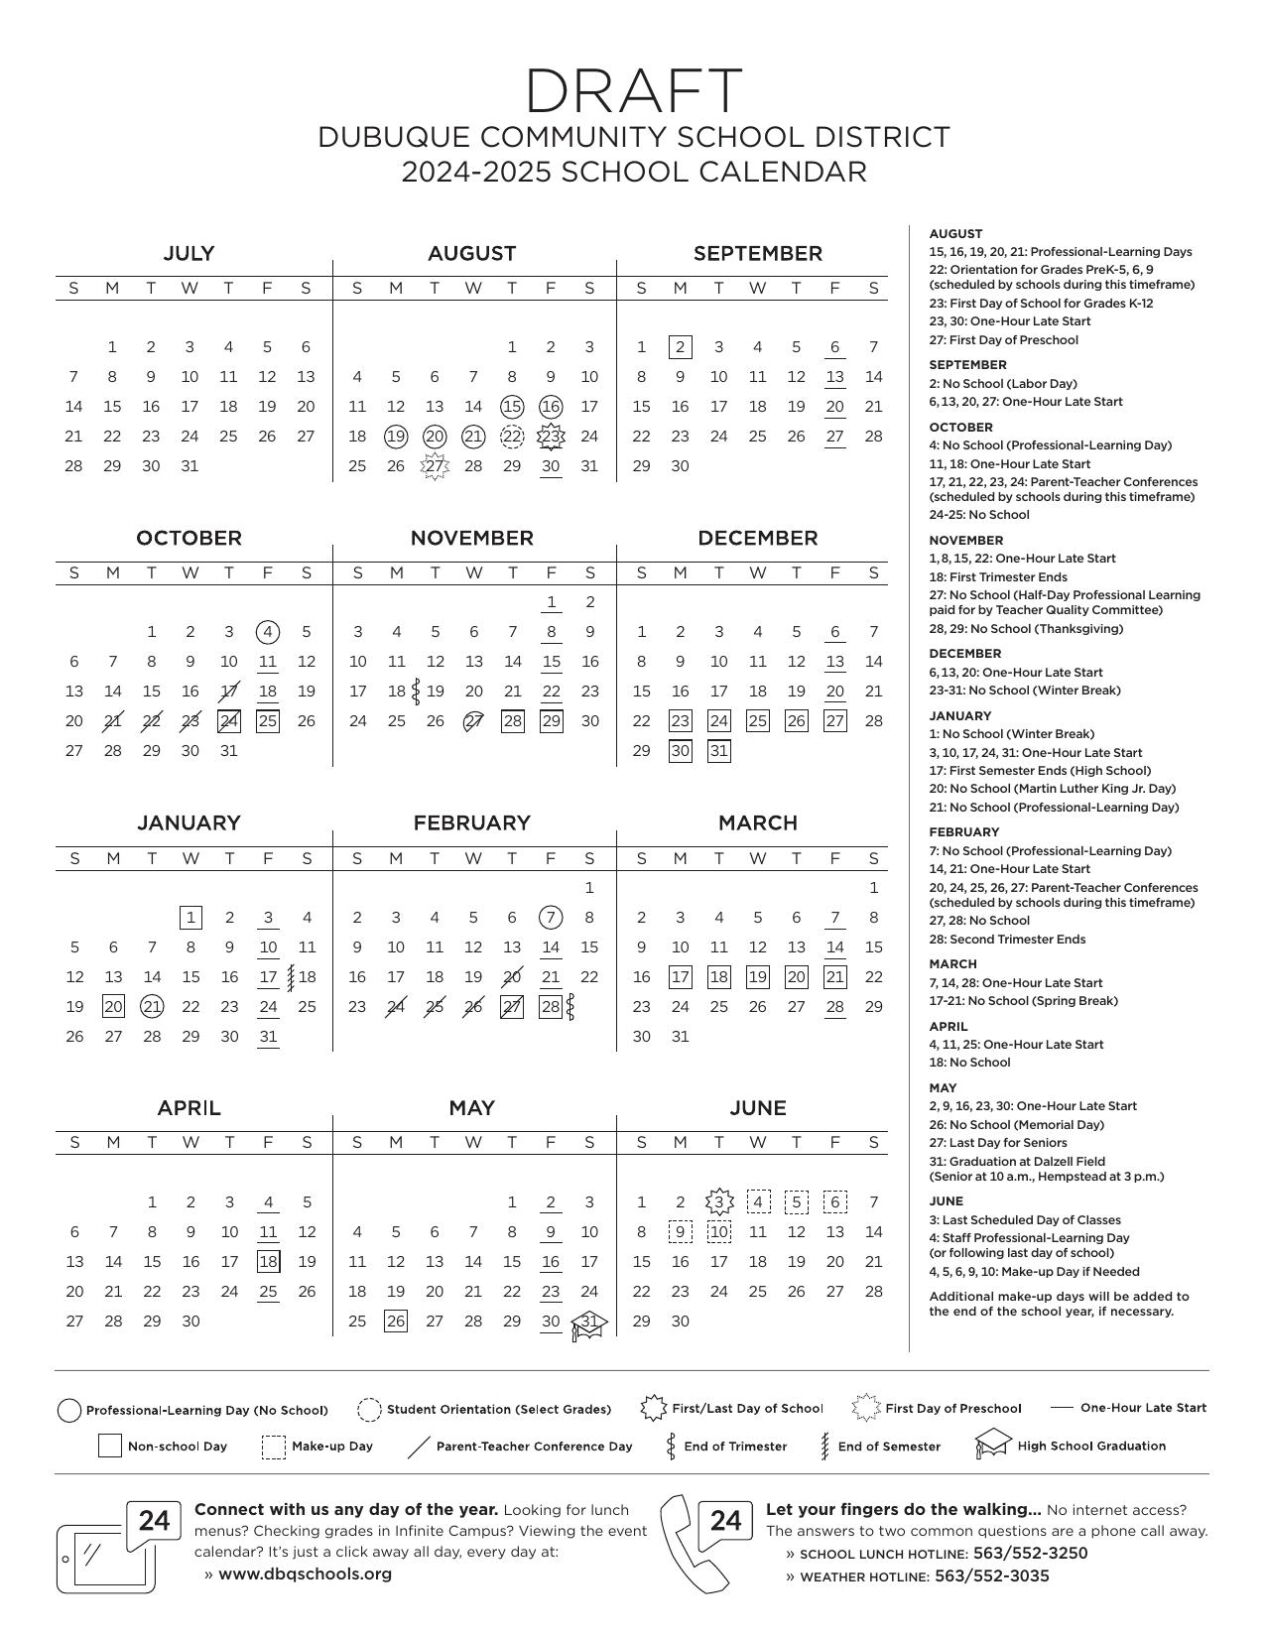 pierre-sd-school-district-calendar-2024-2025-druci-giorgia